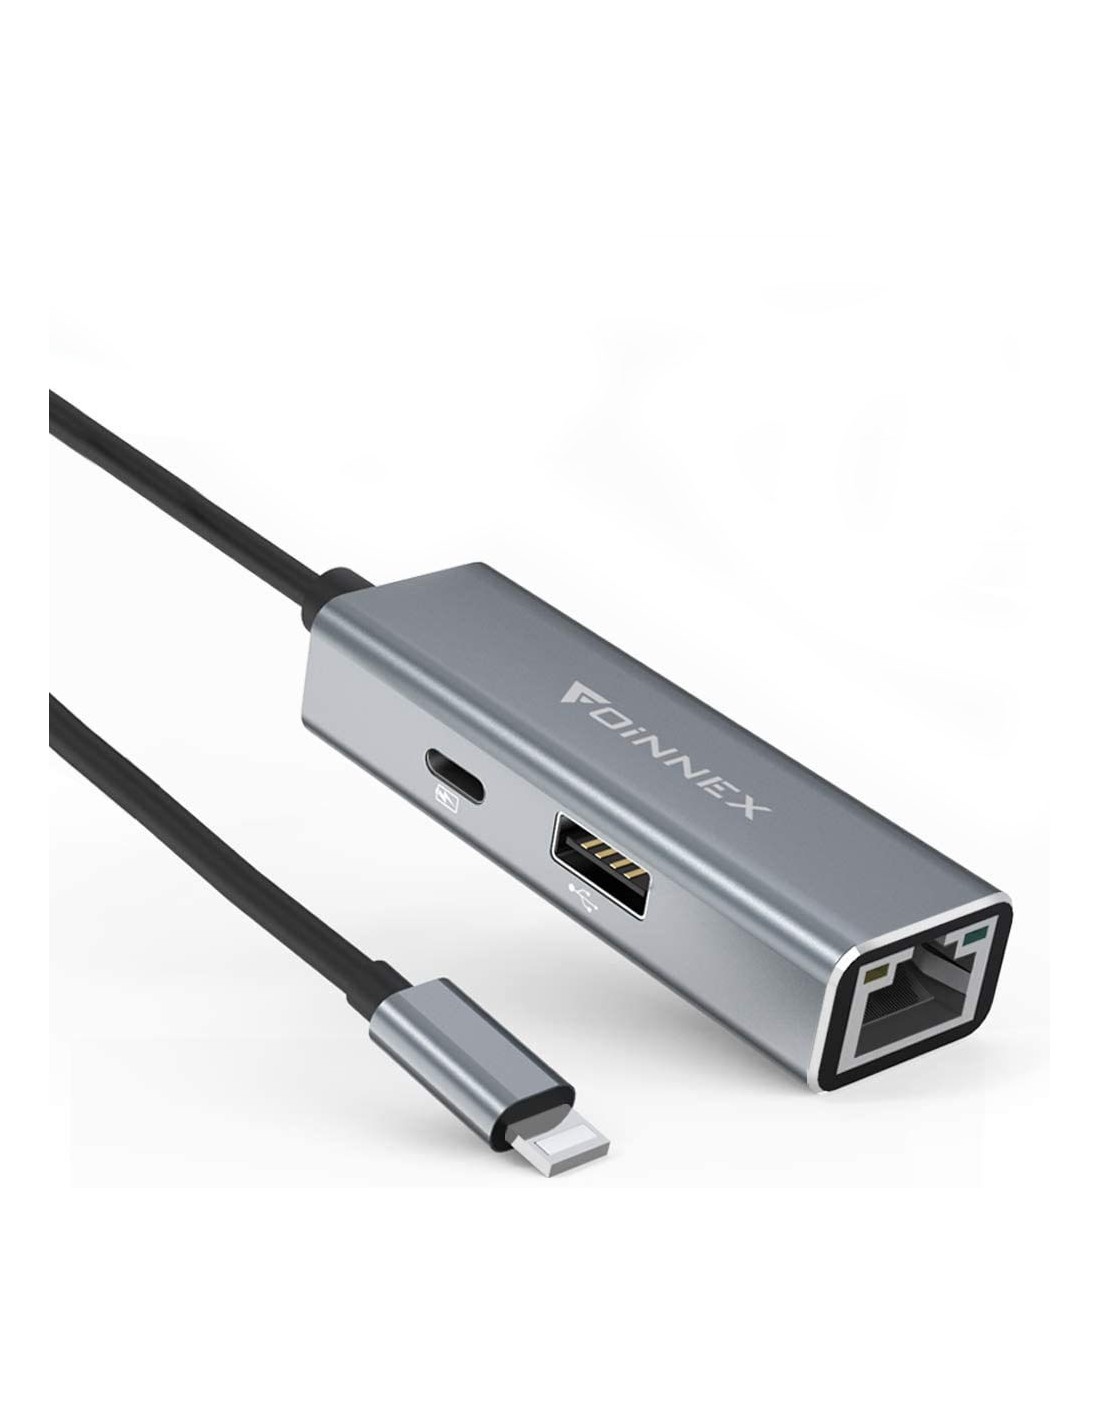 Câble Adaptateur USB Femelle Apple 8 Broches Mâle pour iPad et iPad Mini